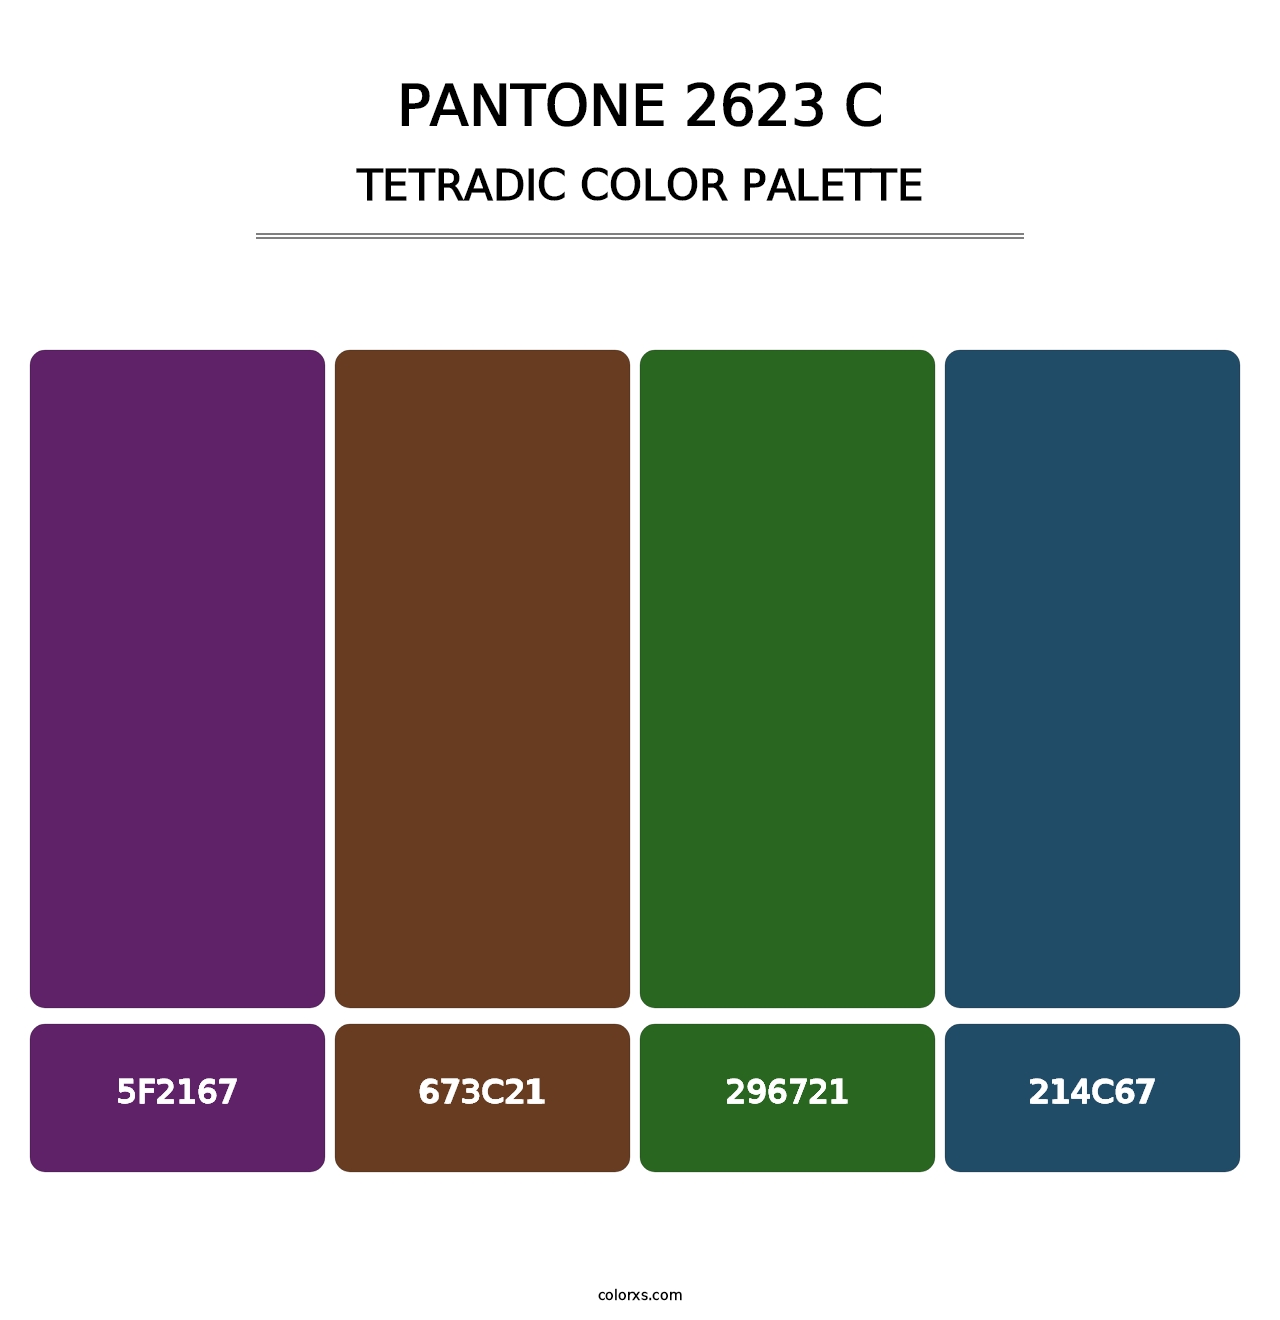 PANTONE 2623 C - Tetradic Color Palette